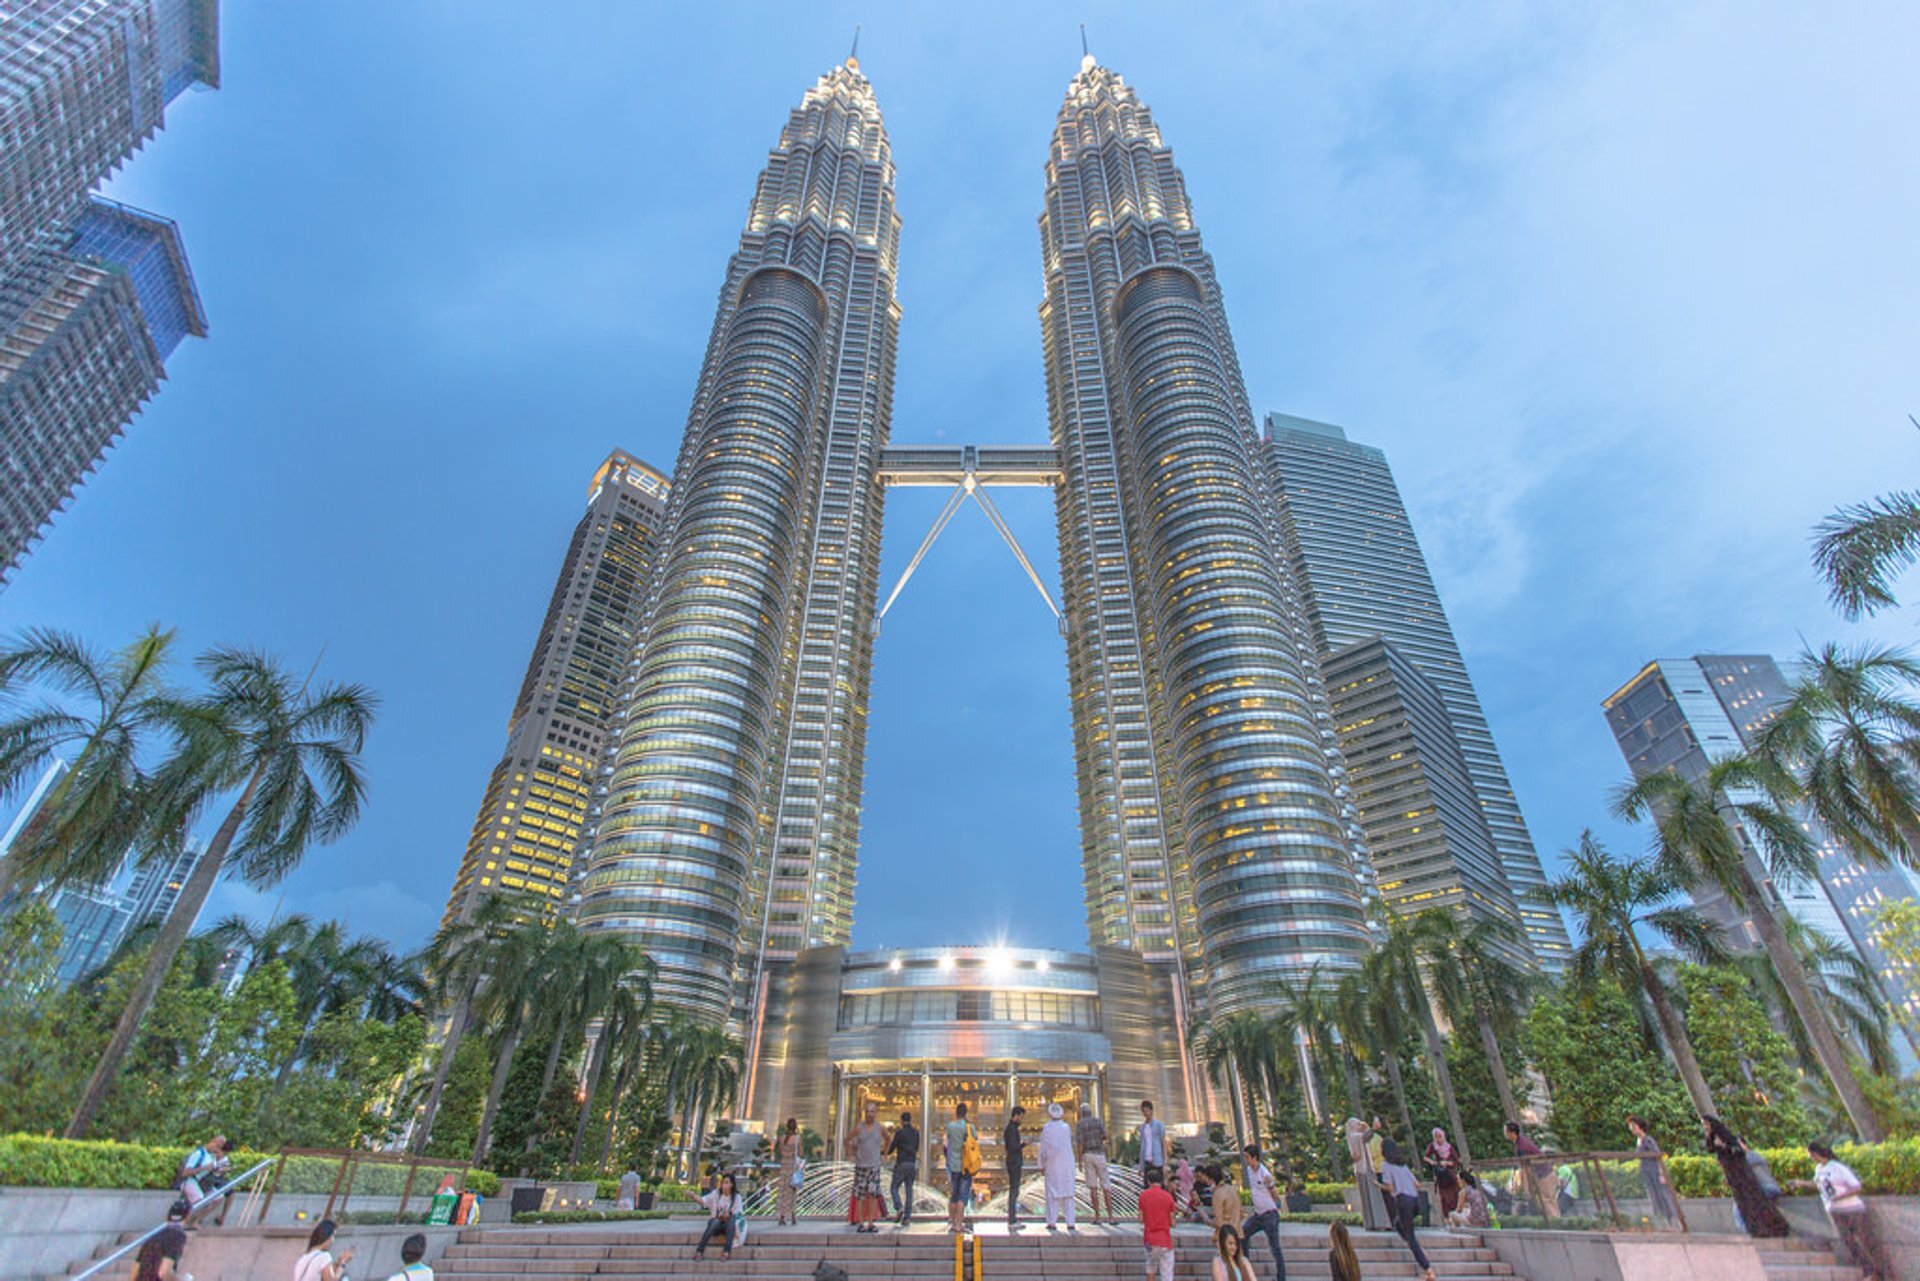 More information about "Τα 15 ψηλότερα κτίρια του κόσμου που ολοκληρώθηκαν το 2019"